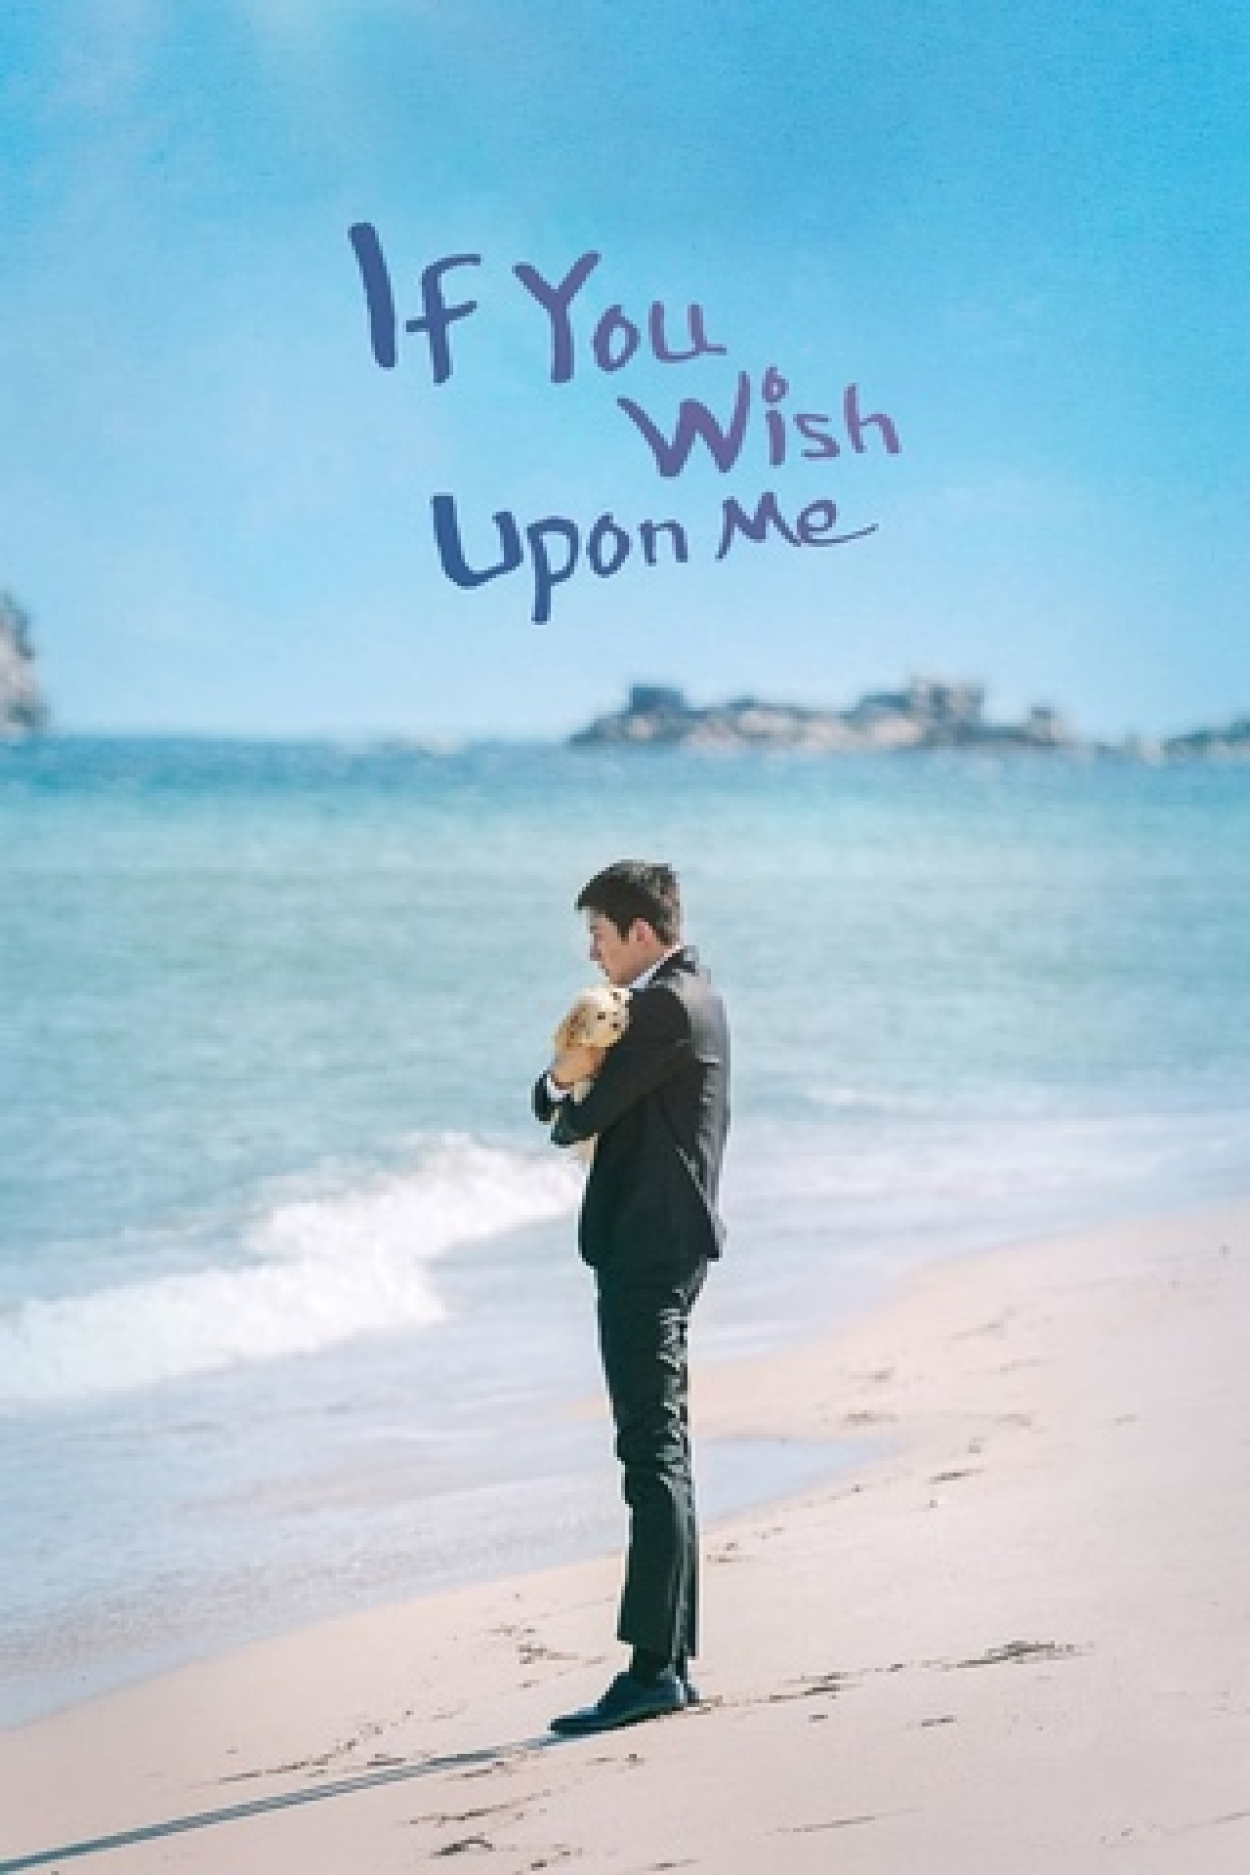 If You Wish Upon Me (Série), Sinopse, Trailers e Curiosidades - Cinema10